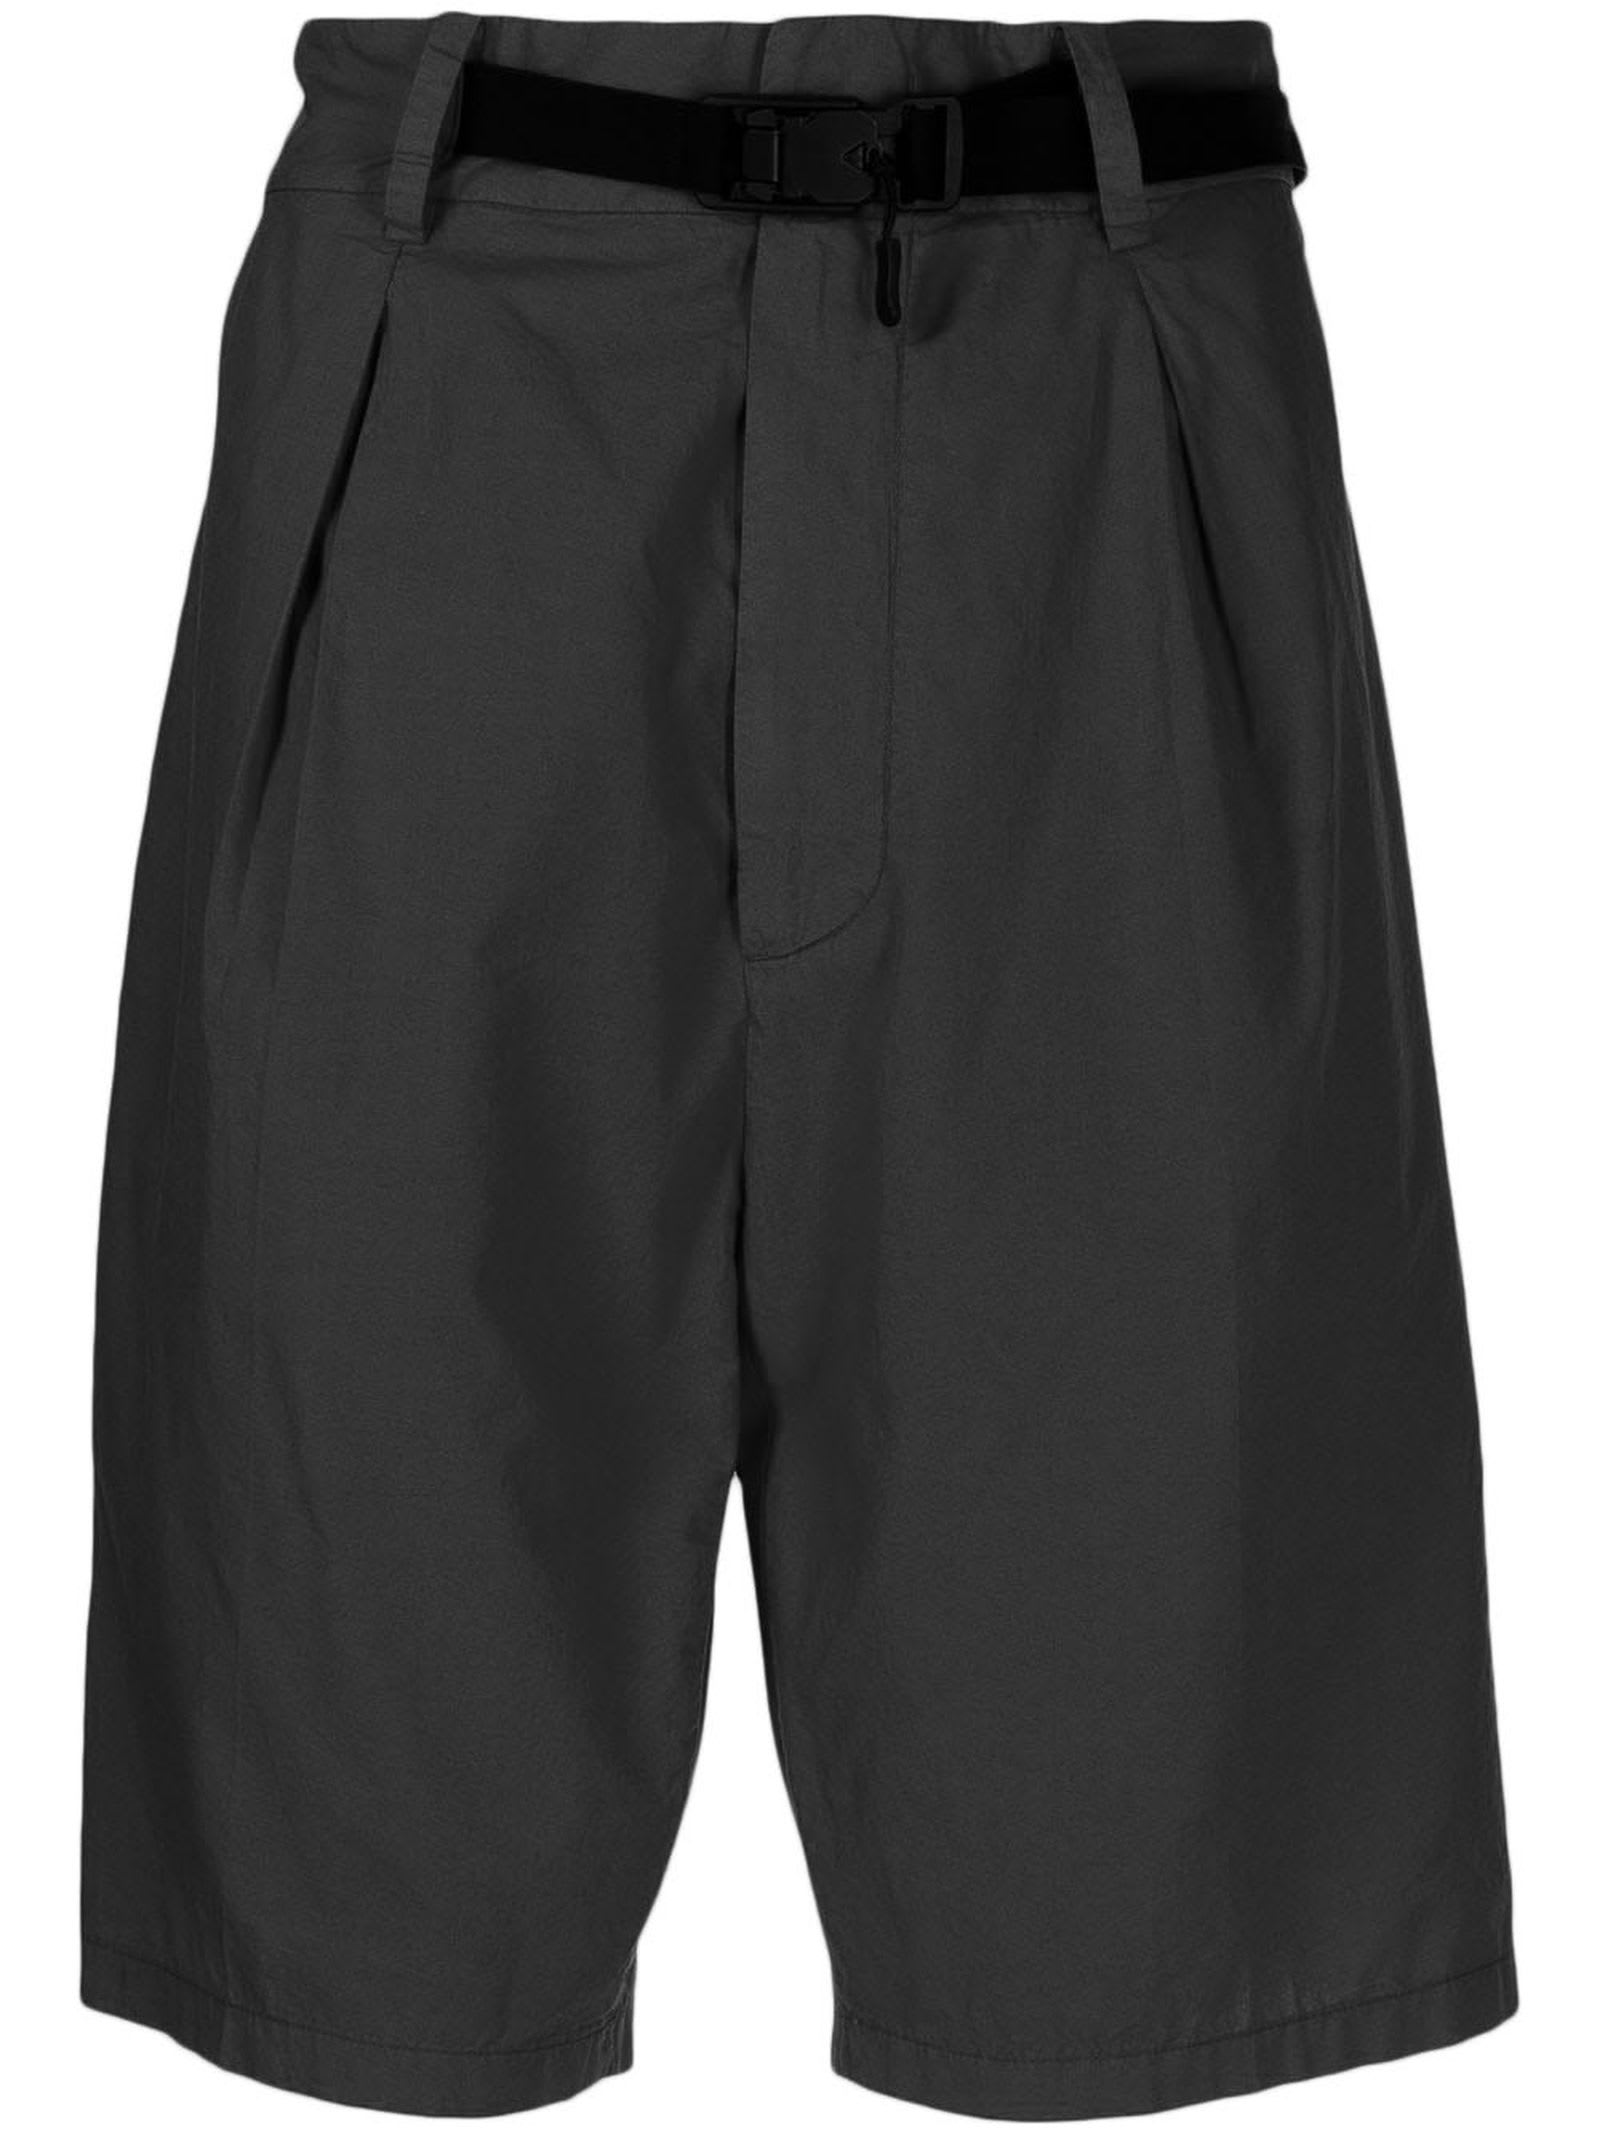 N.21 Black Cotton Shorts